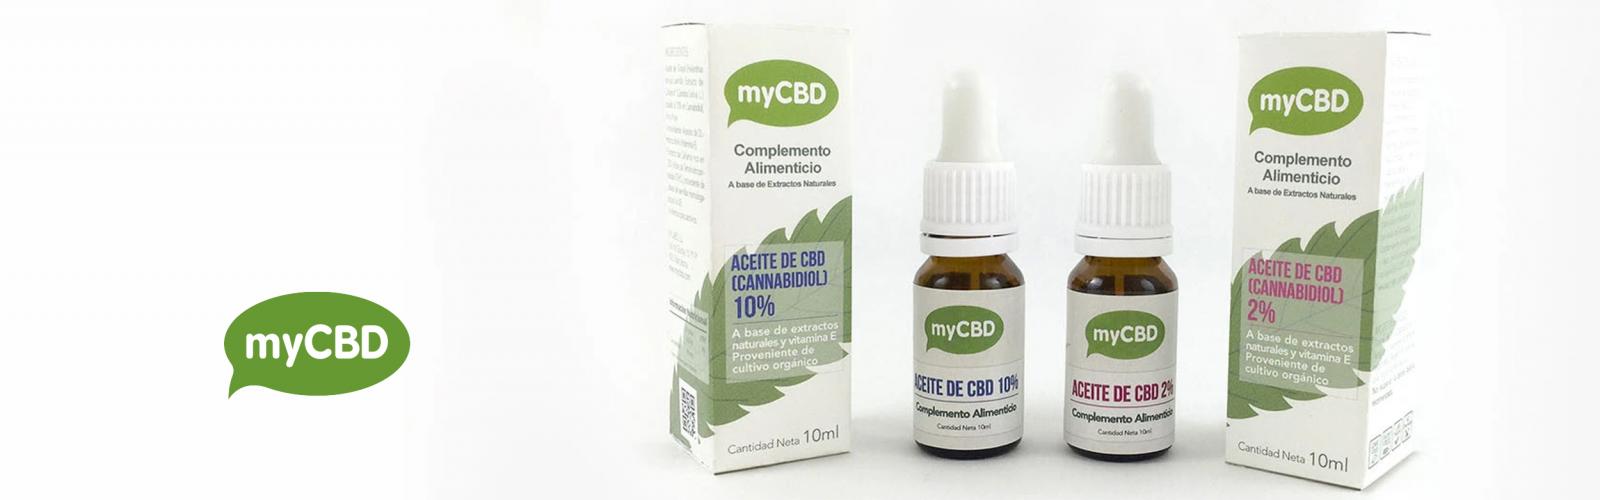 myCBD products